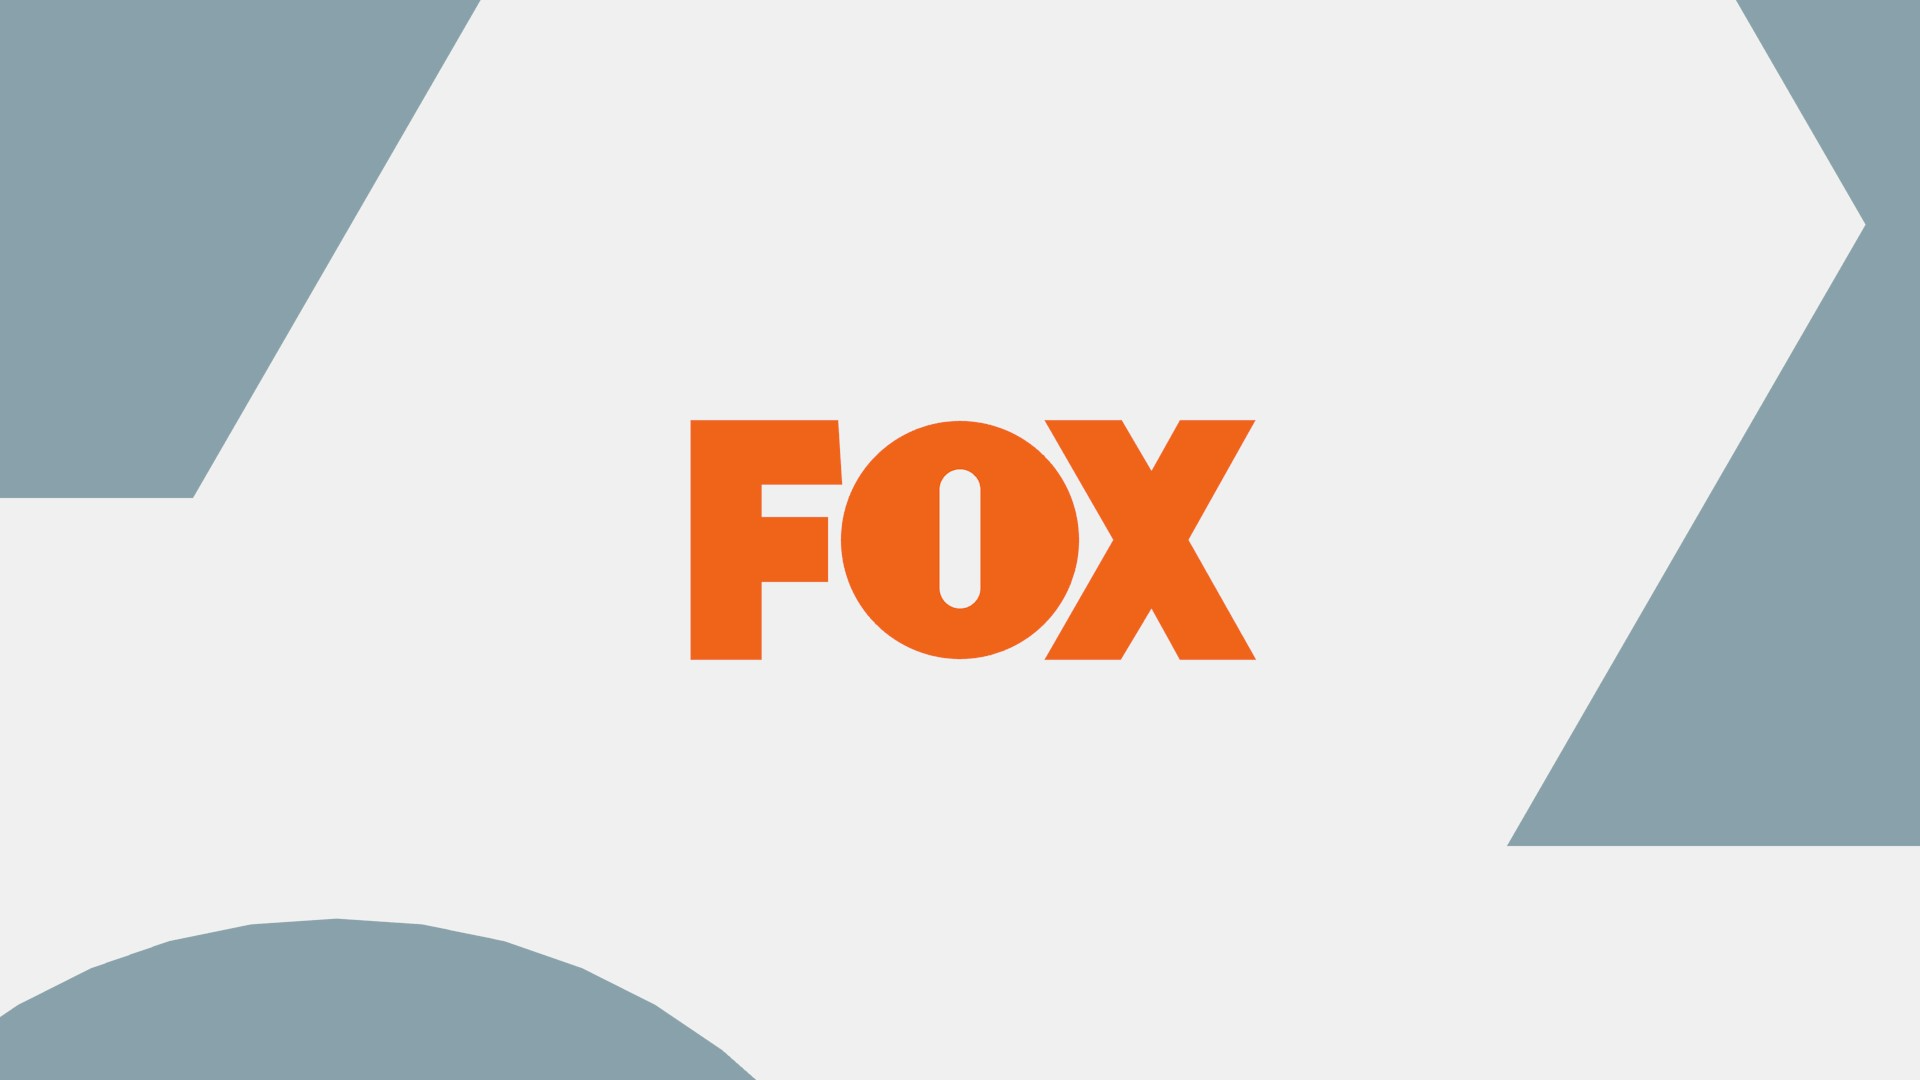 Fox entertainment. Fox New logo. Fox Entertainment Group logo. EVOS Branding. Dominant logo.